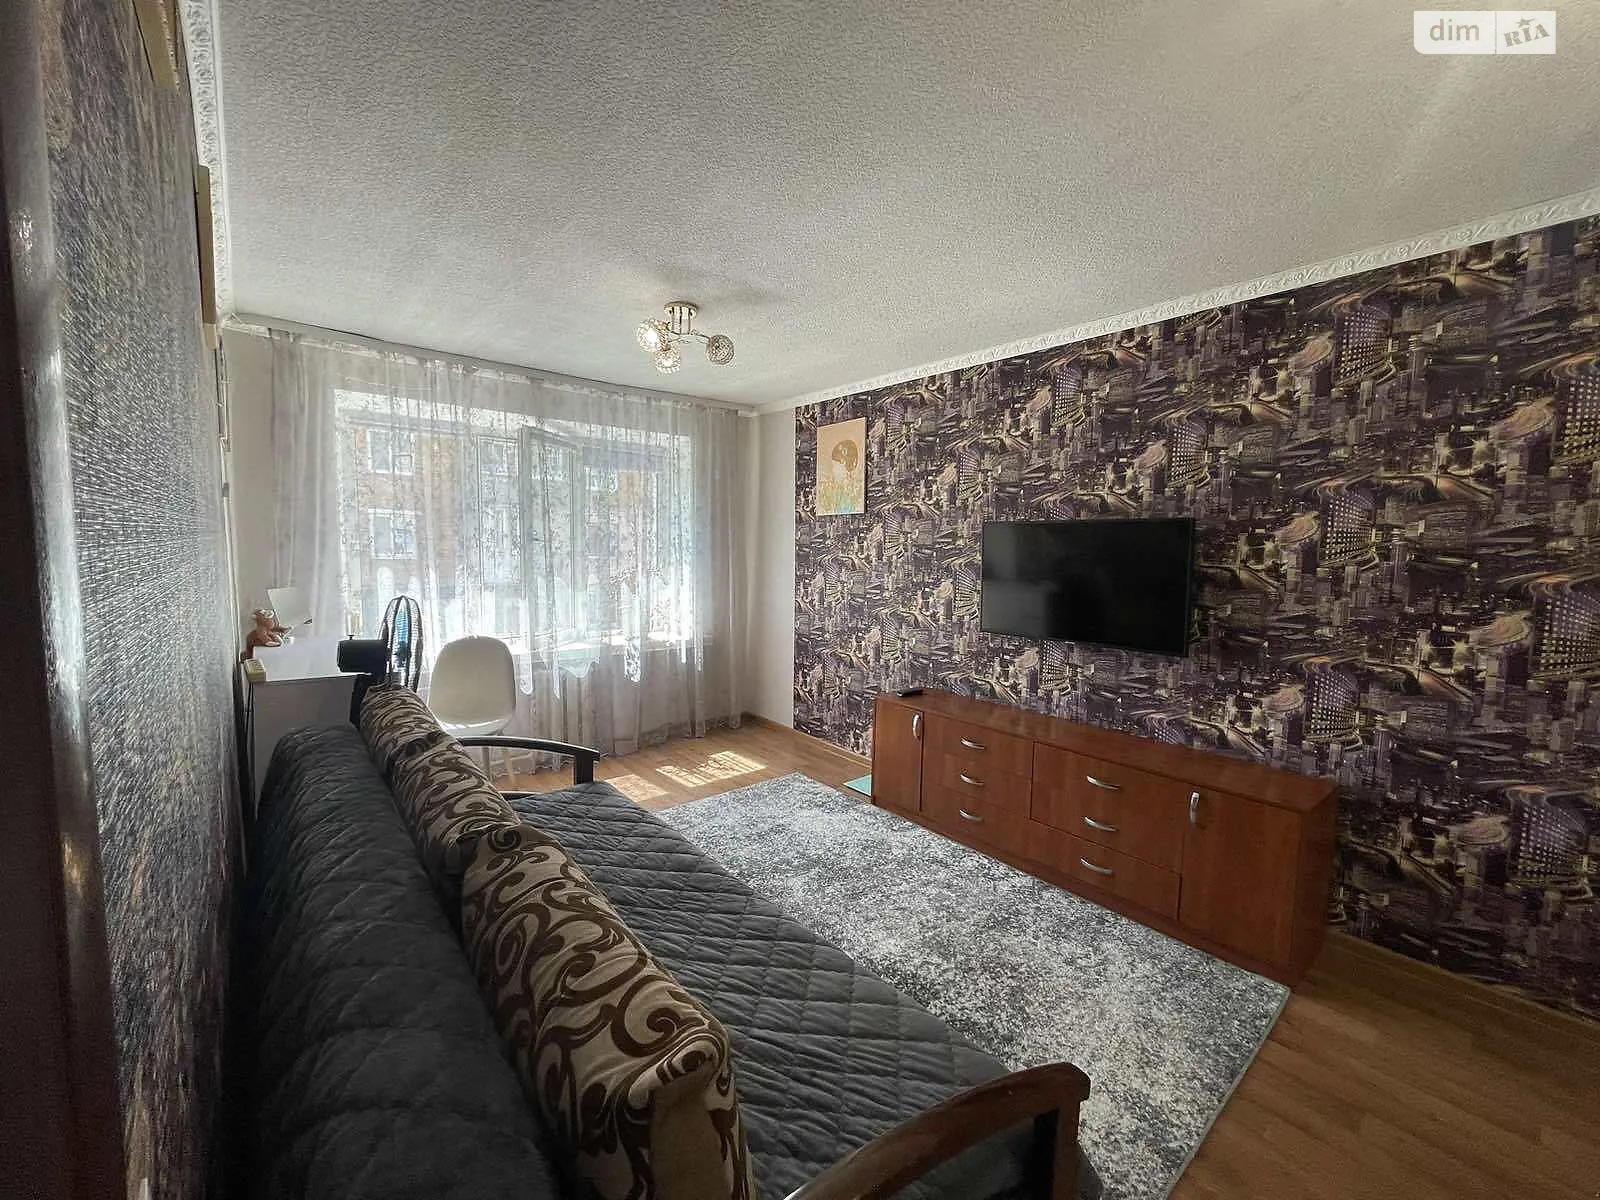 Продается комната 34 кв. м в Ровно - фото 2